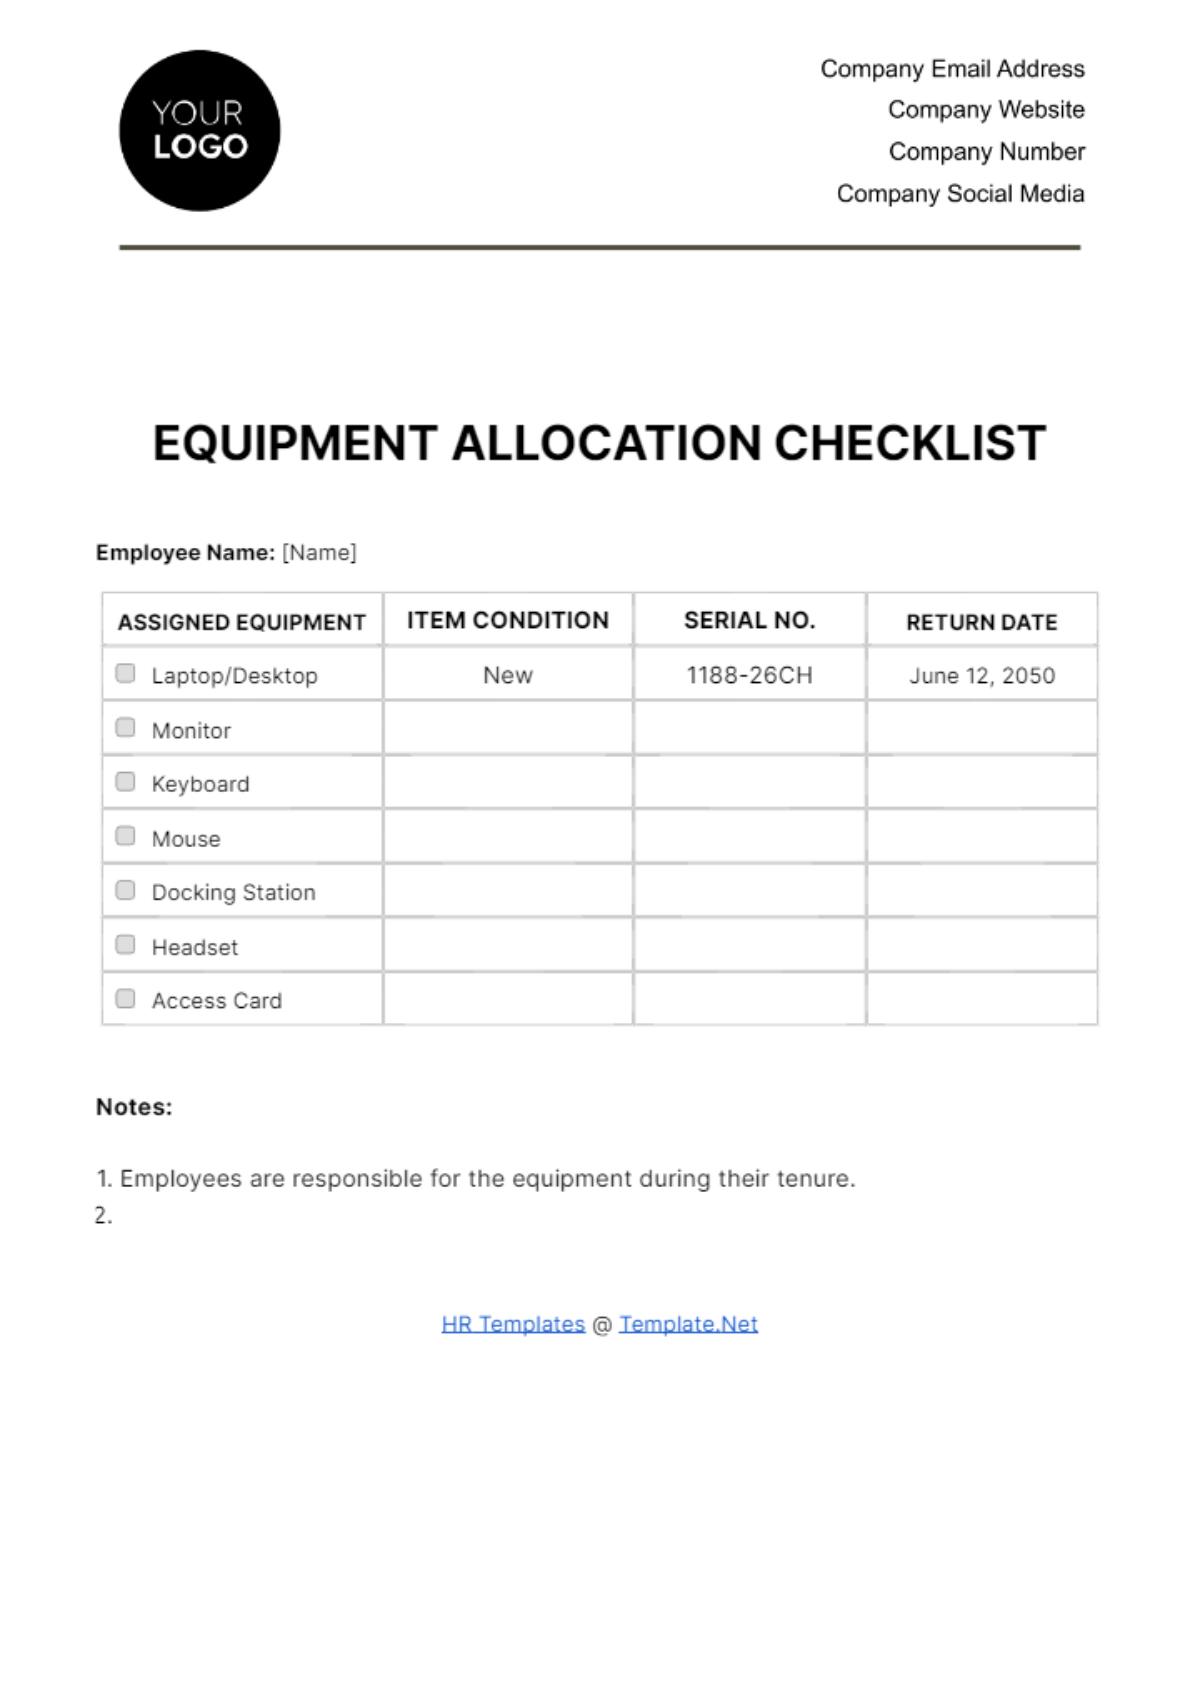 Free Equipment Allocation Checklist HR Template